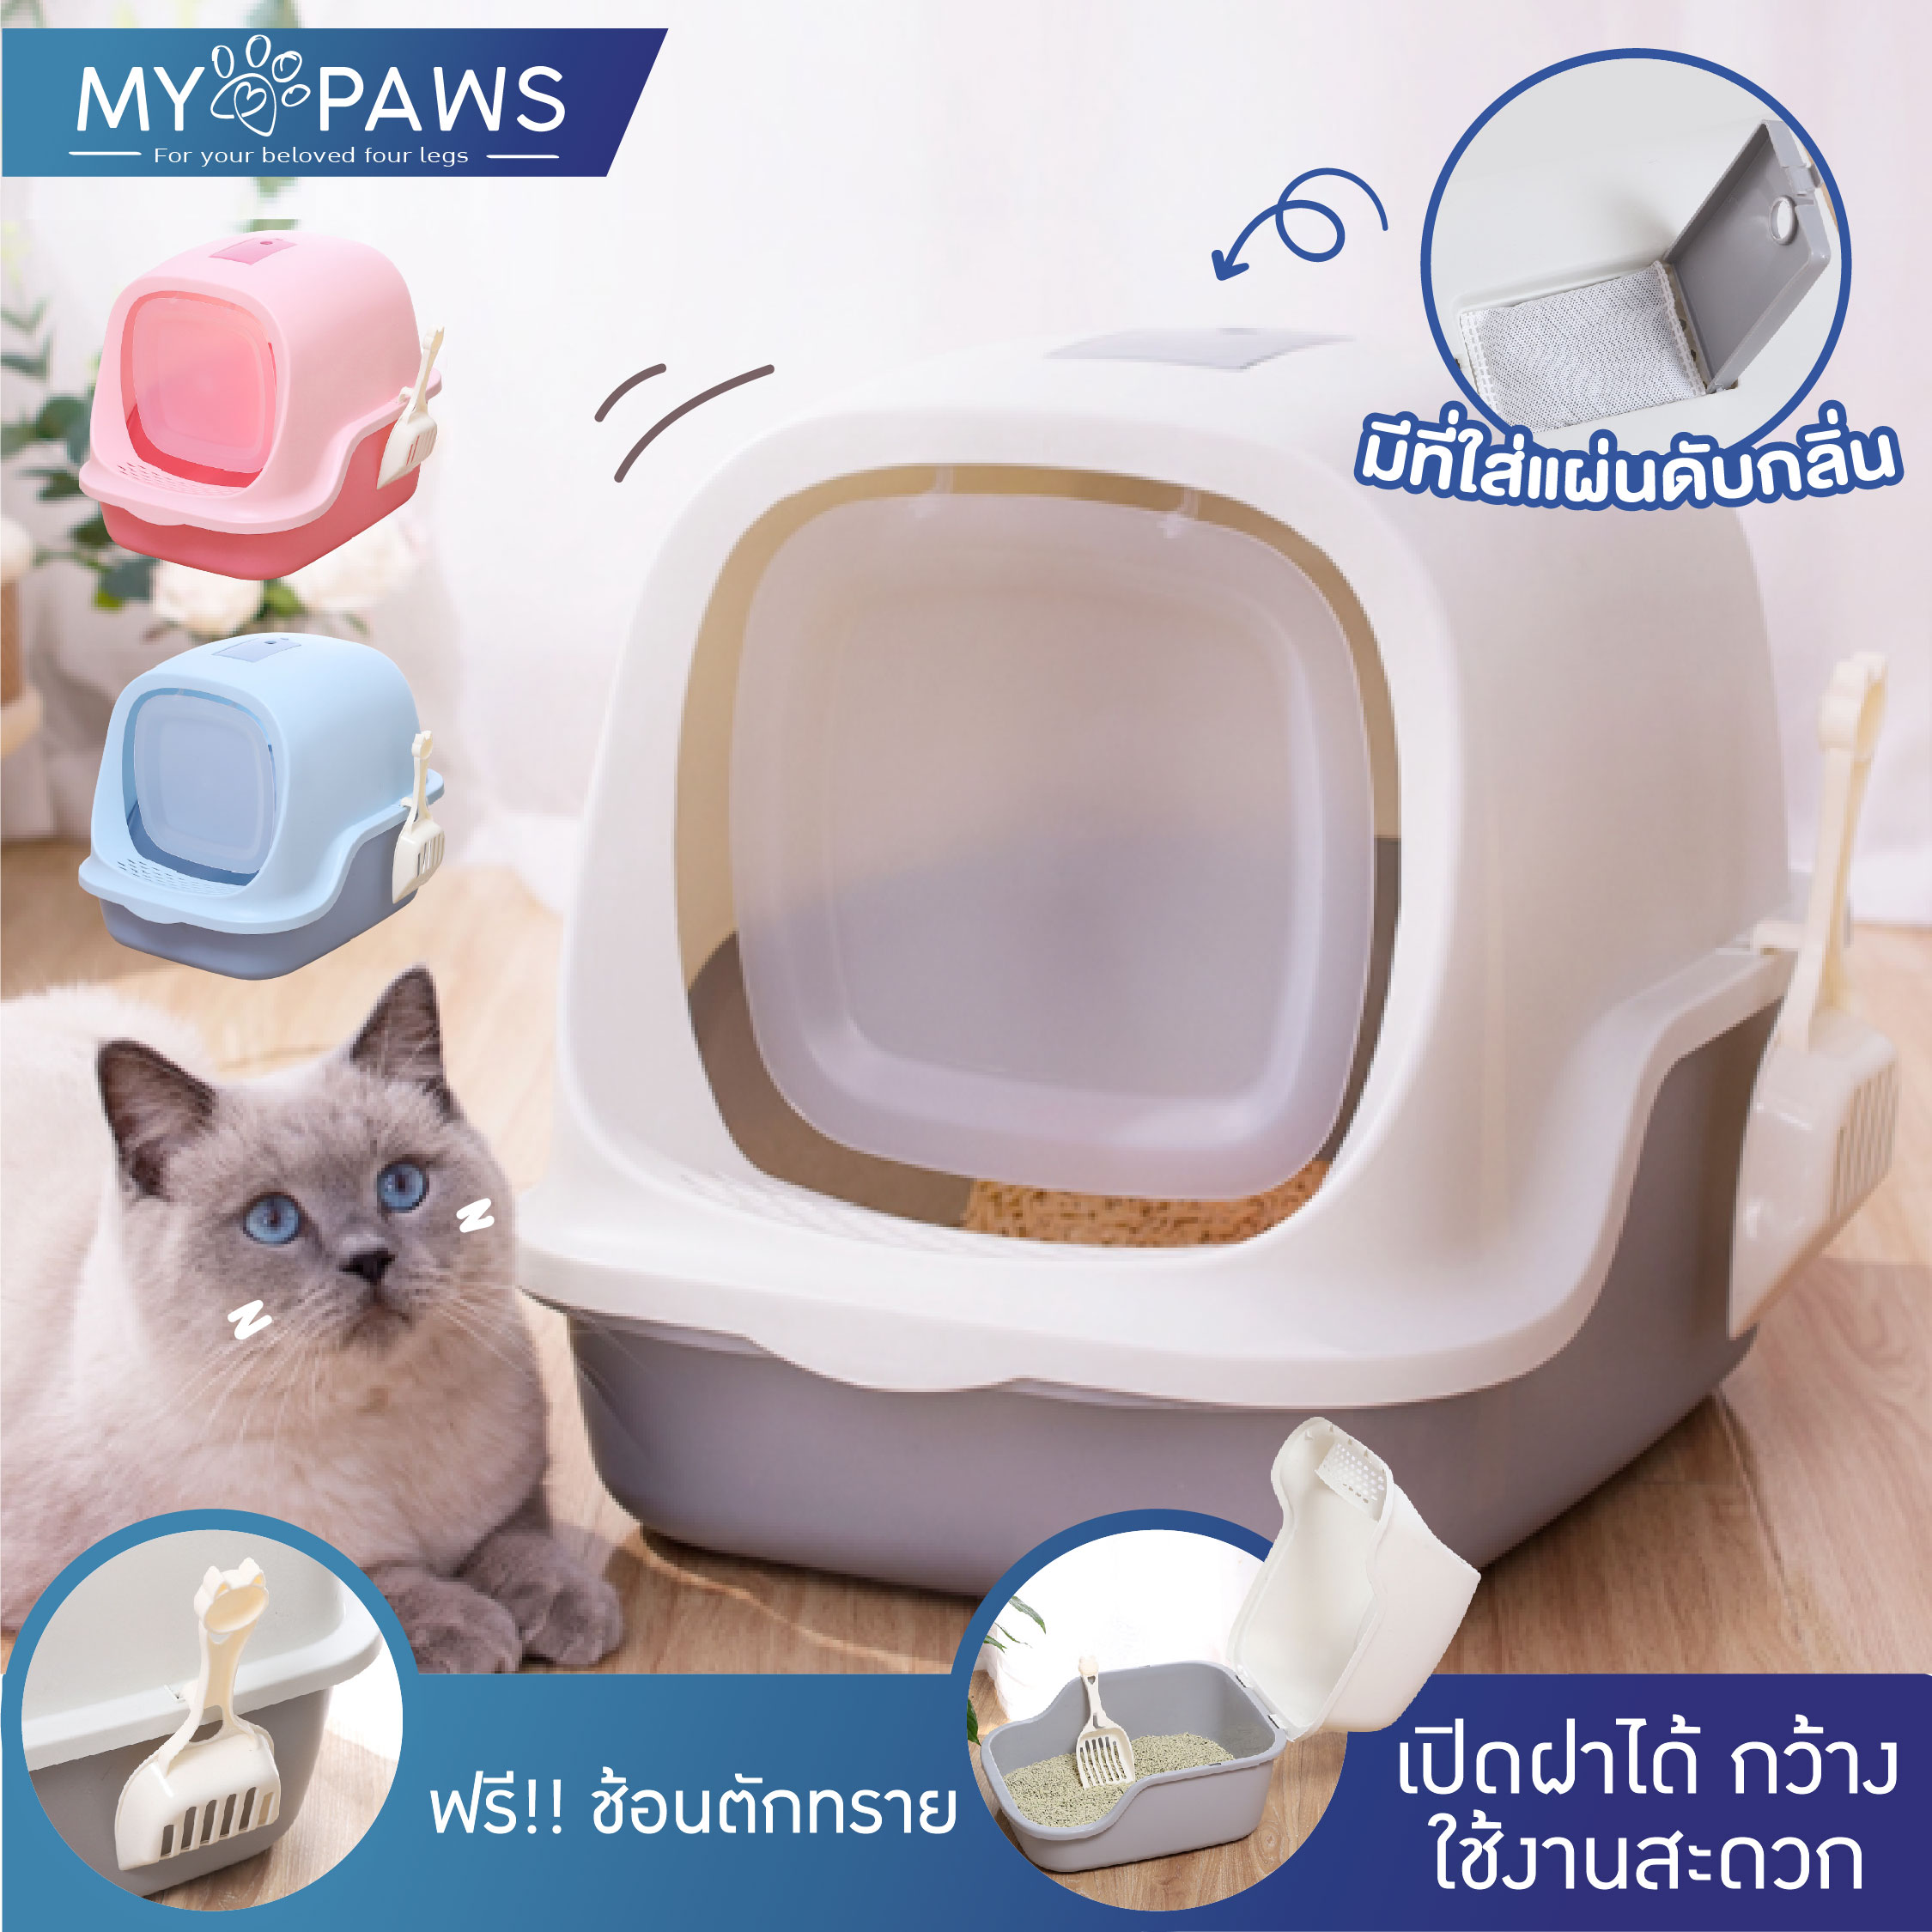 My Paws ห้องน้ำแมว โดมแมว Eco สุดประหยัด มีที่เก็บกลิ่น ฟรีที่ตักทราย ฟรีถุงเก็บกลิ่น กระบะทรายแมว